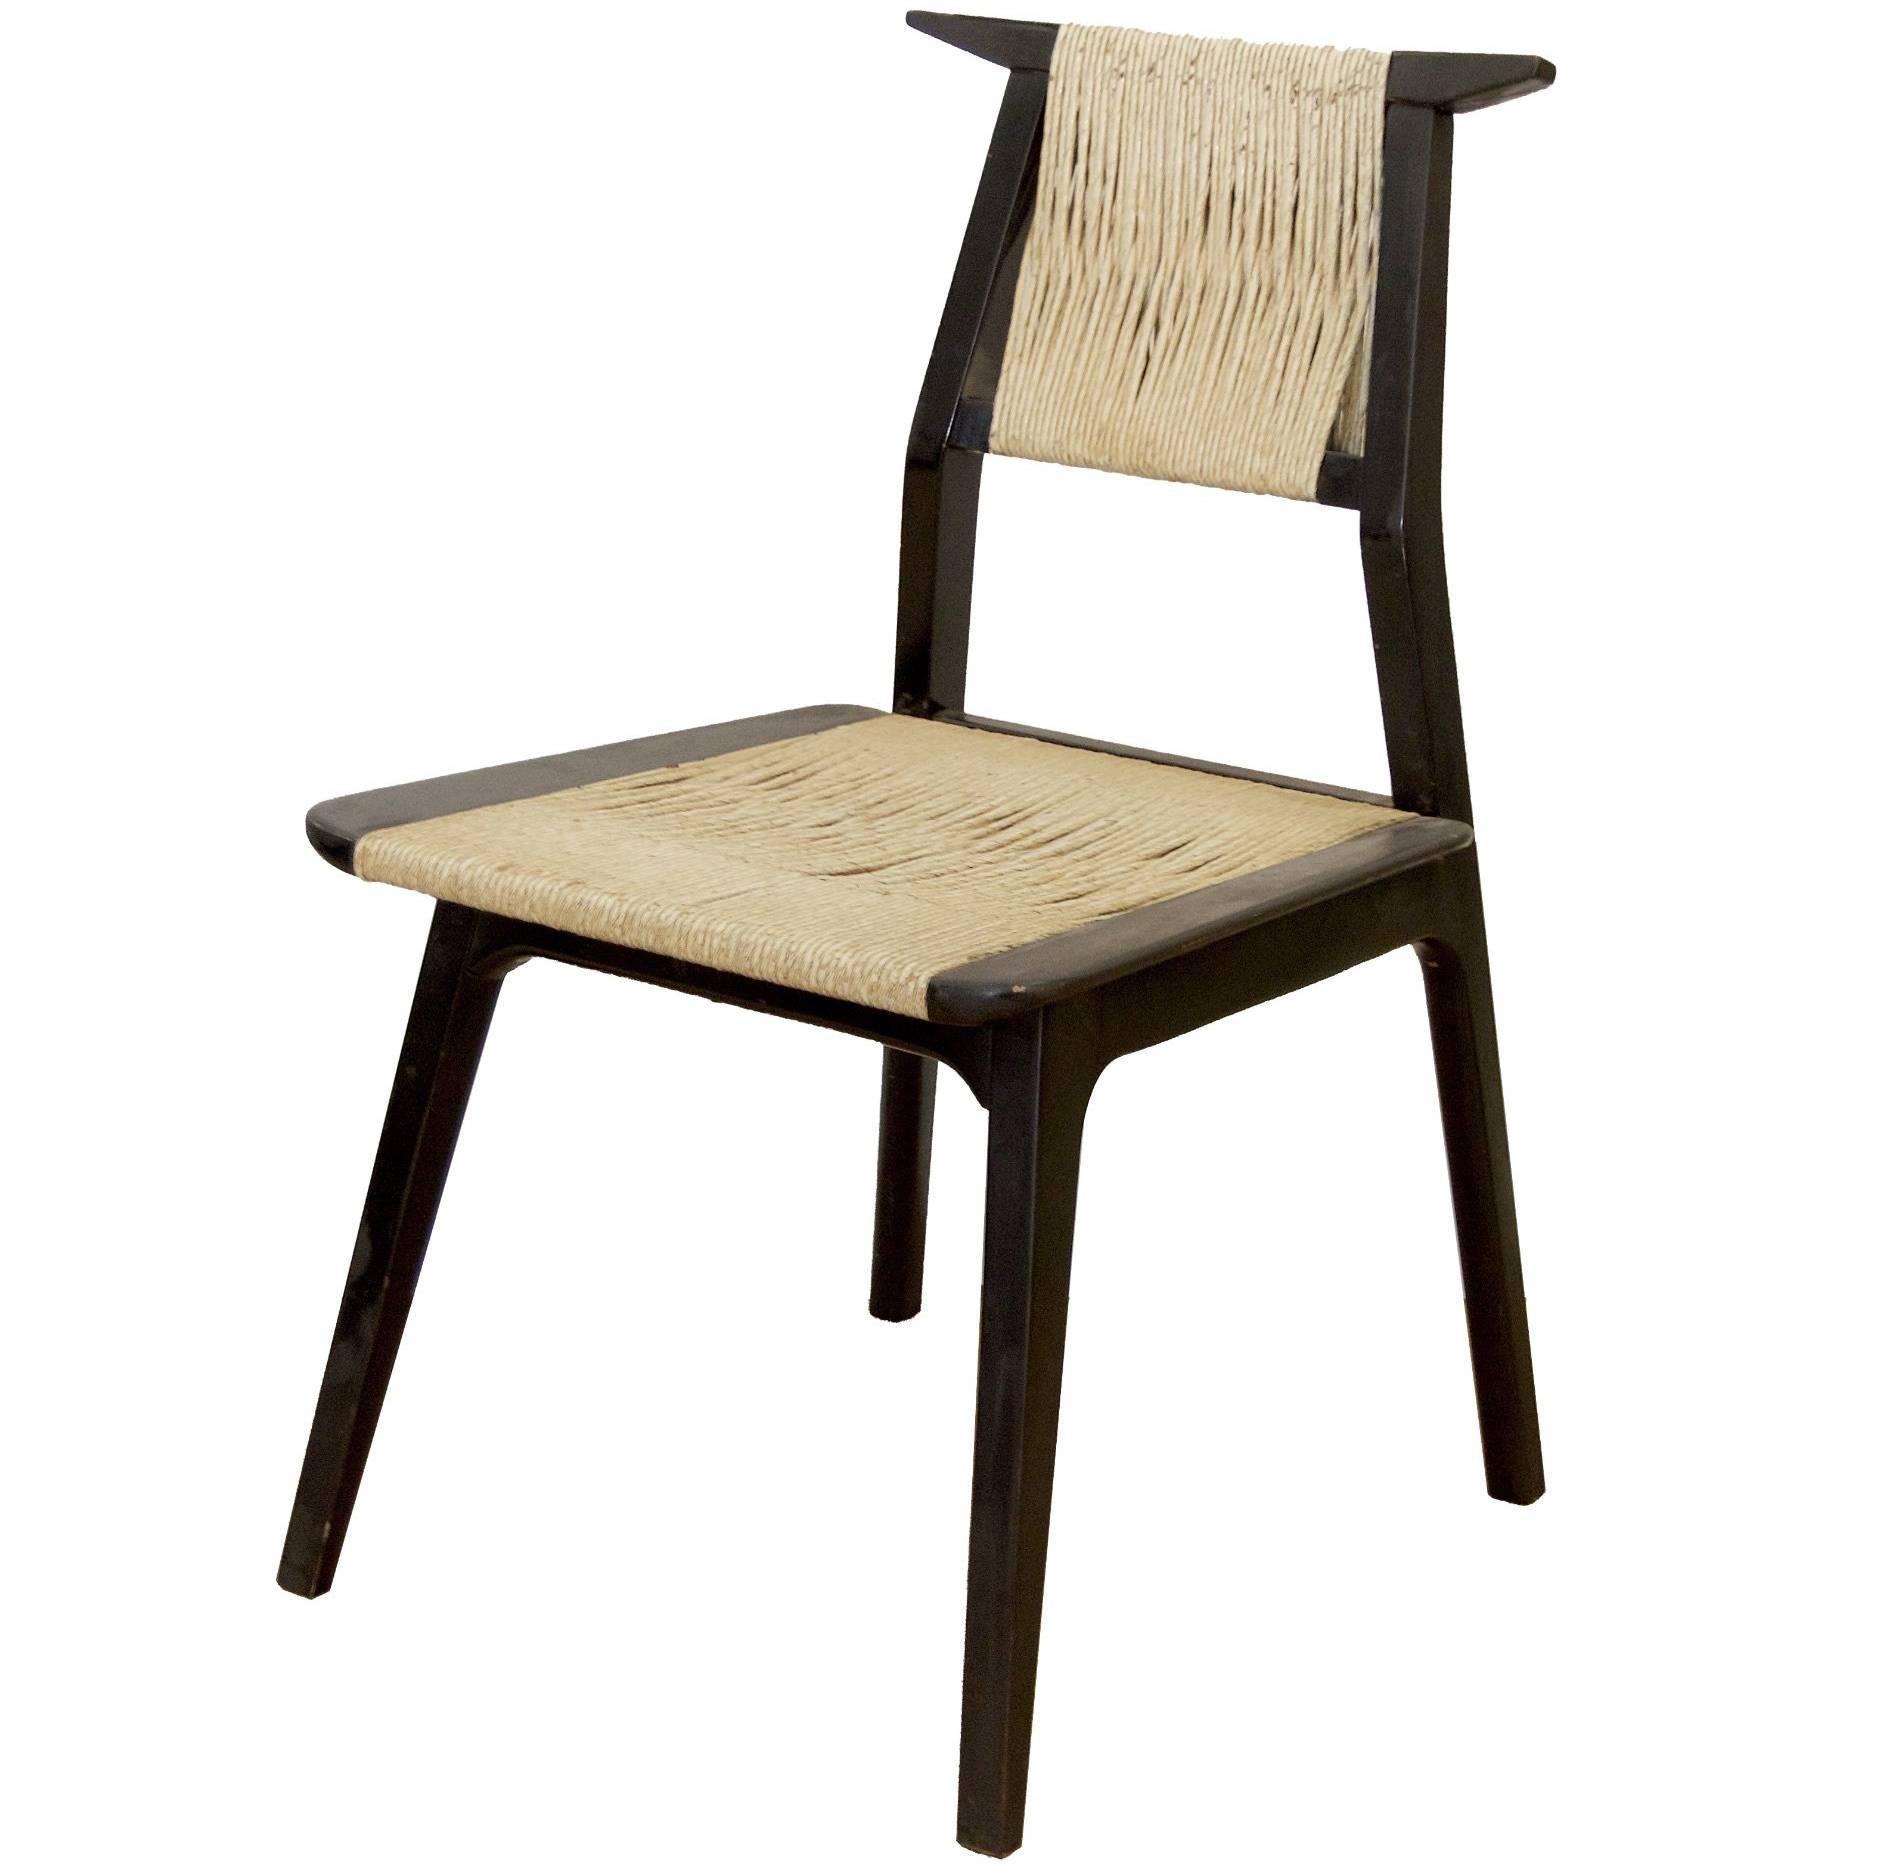 Unusual Danish Cord-Wrap Chair